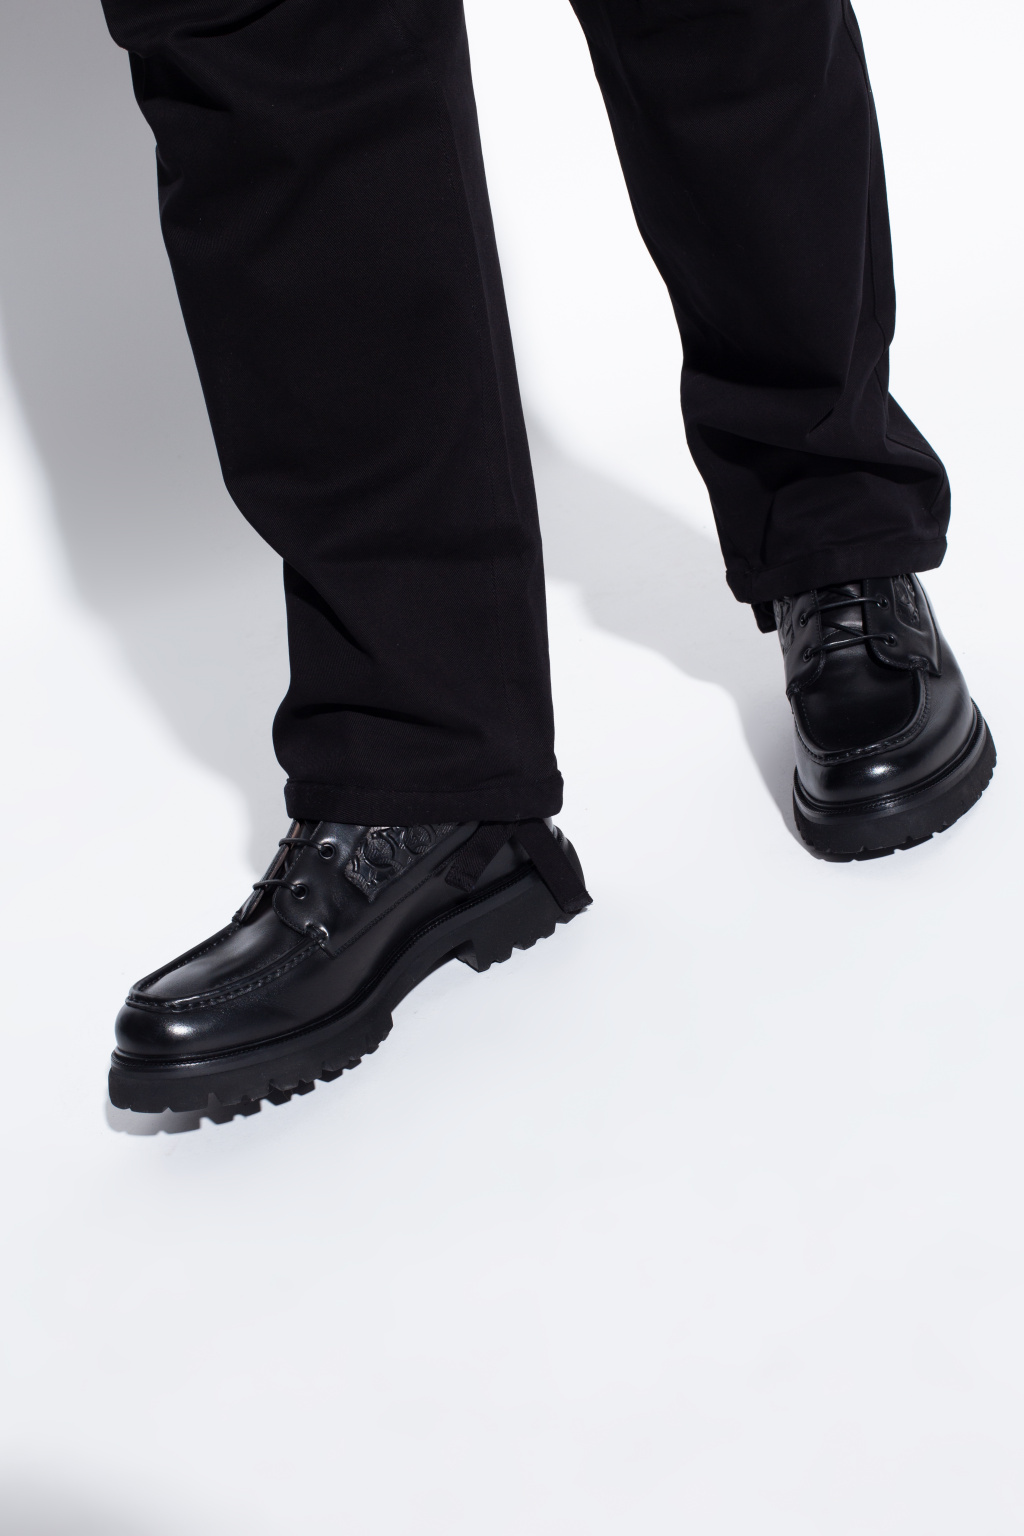 Salvatore Ferragamo ‘Naval 2’ leather ankle boots